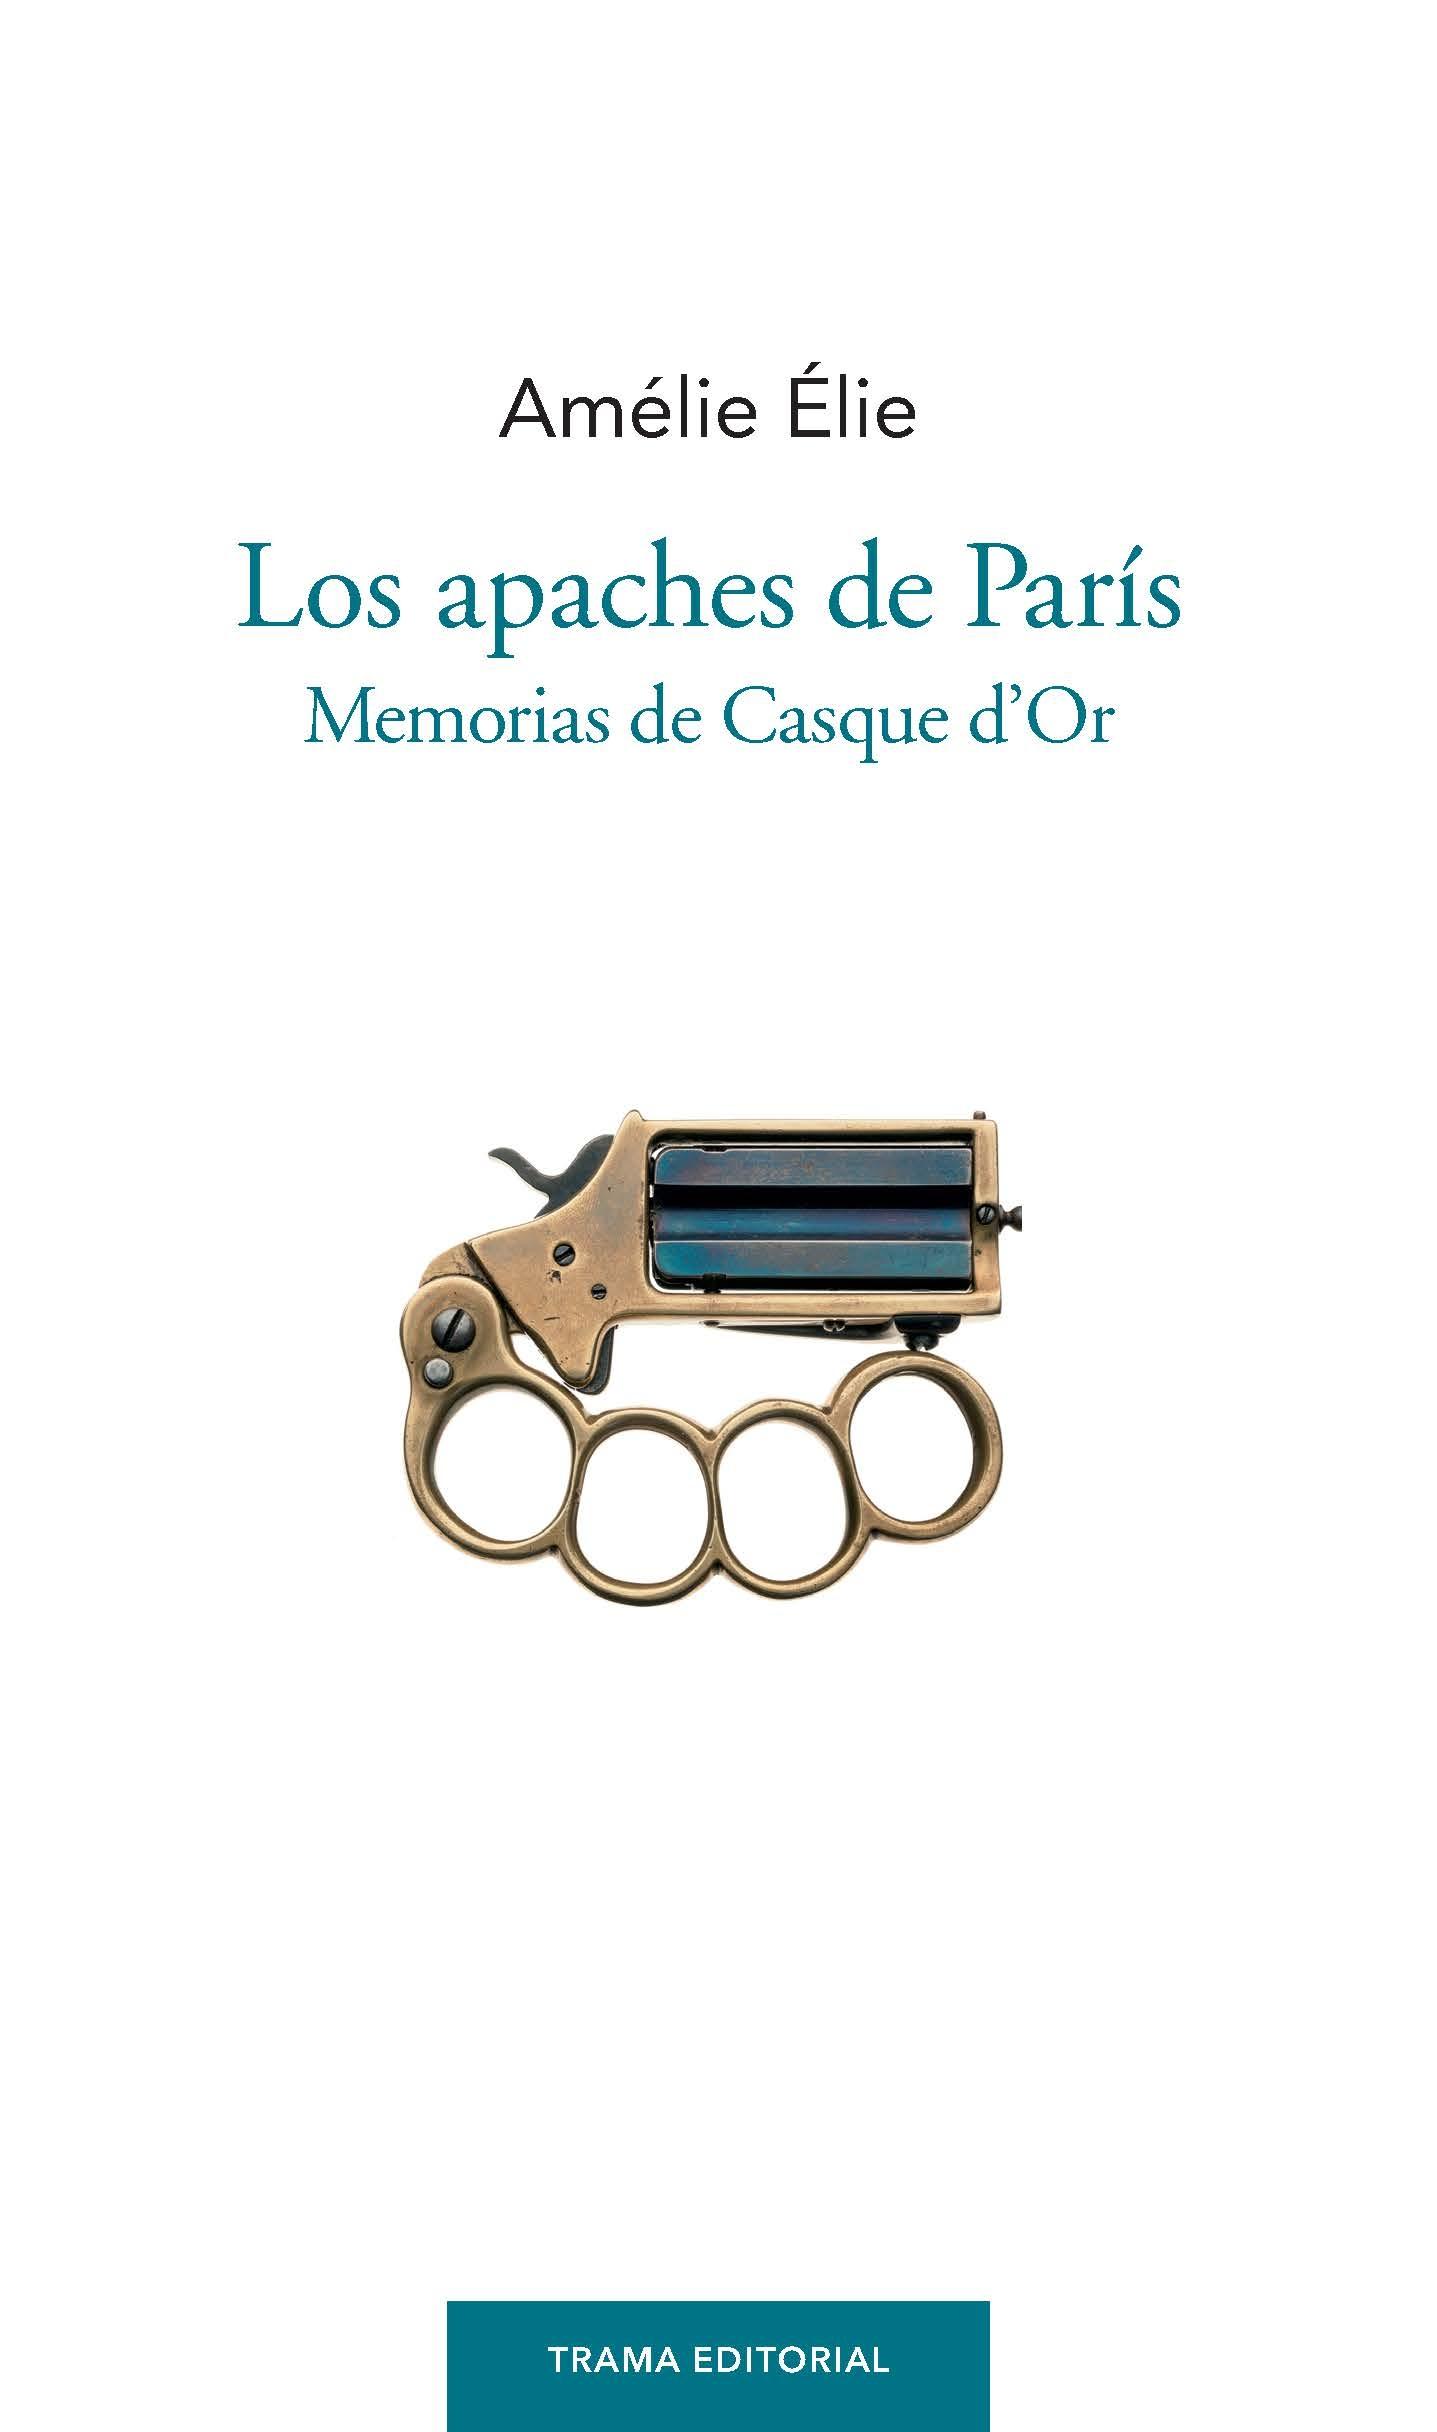 Los Apaches de París "Memorias de Casque D'Or"